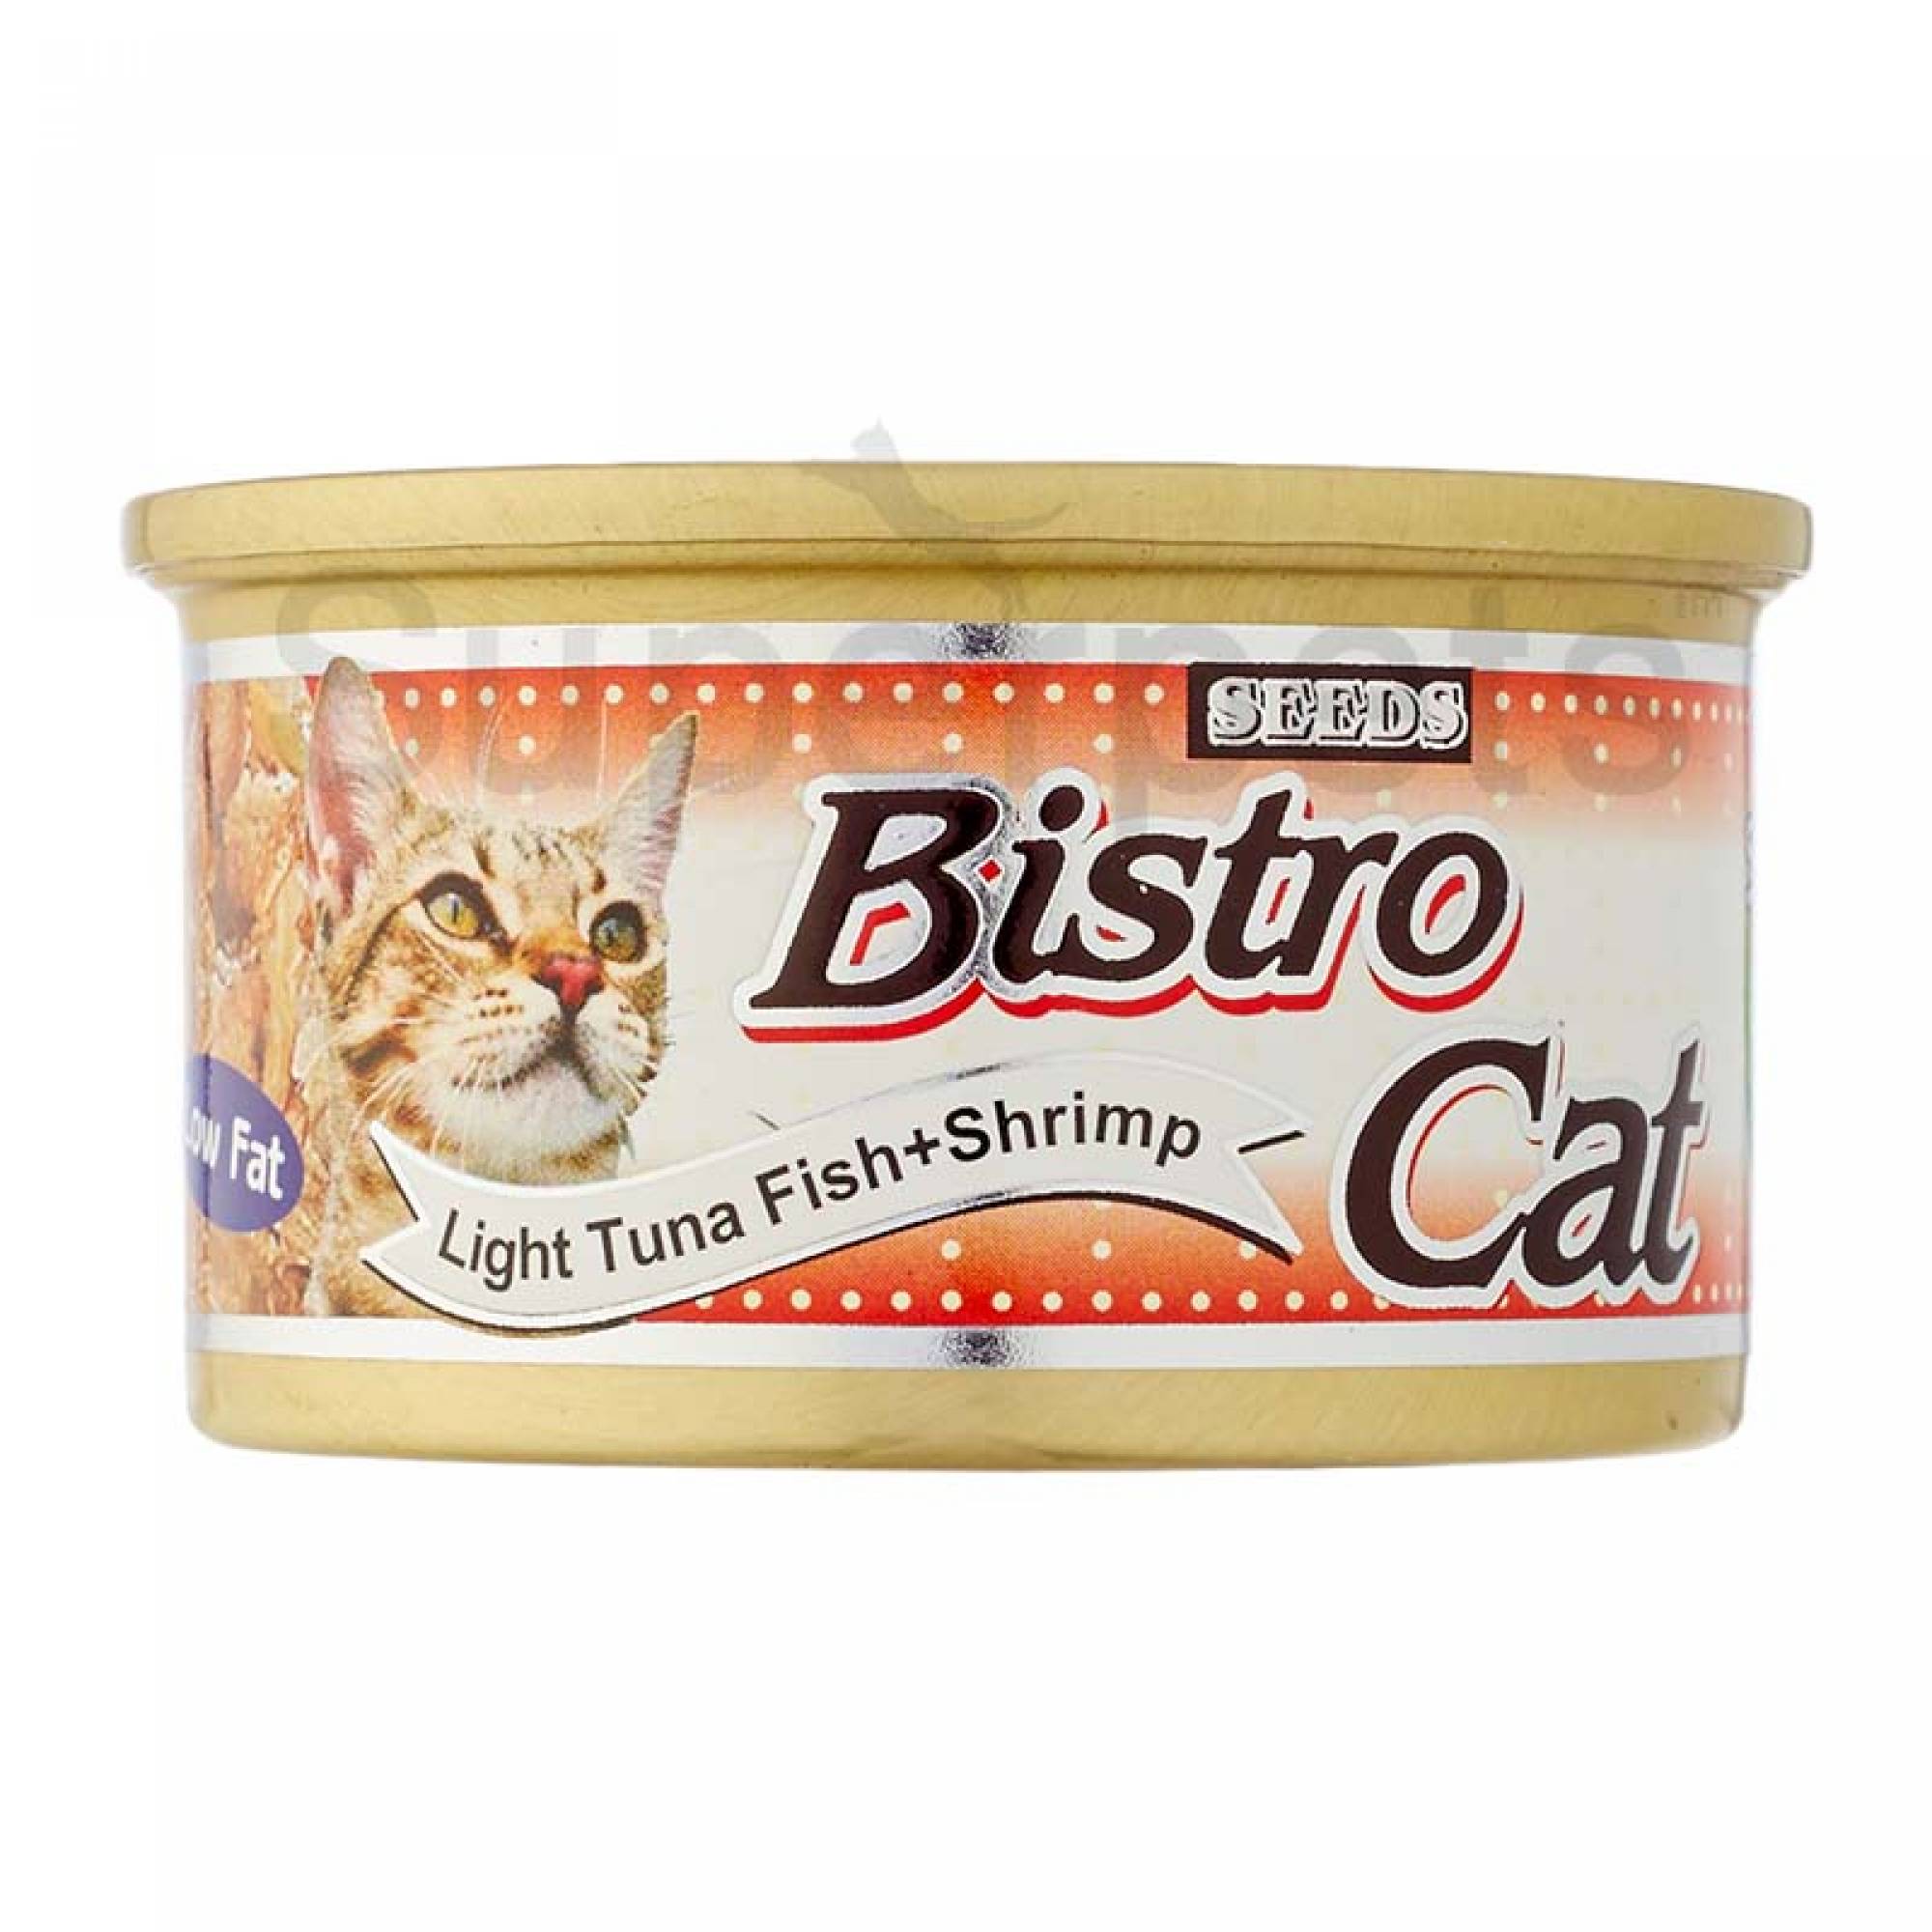 Bistro Cat Light Tuna Fish + Shrimp 80g